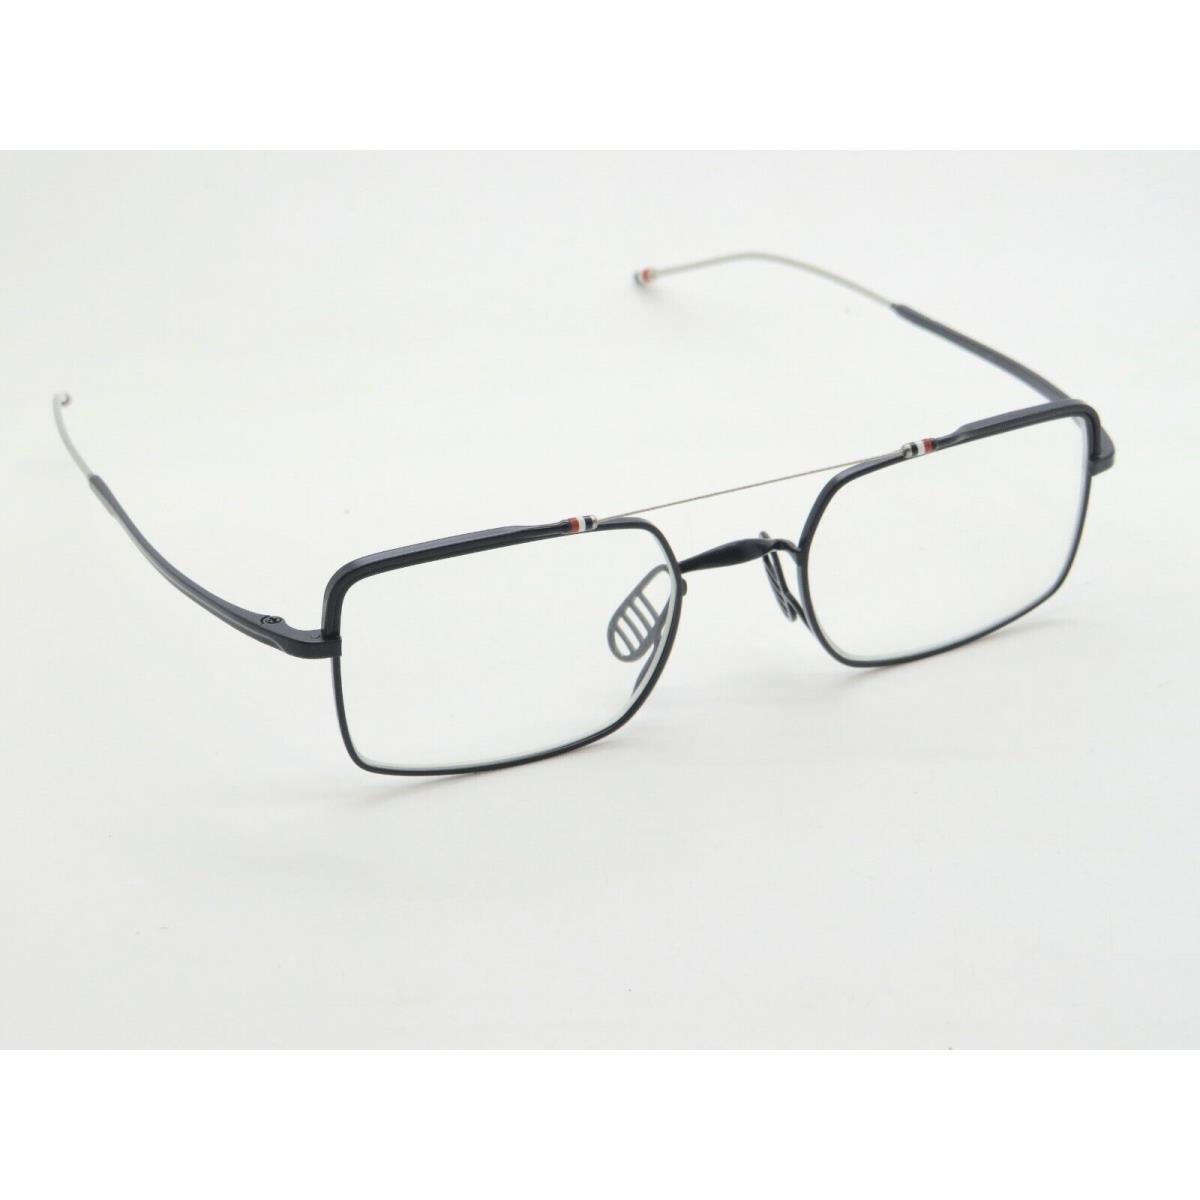 Thom Browne TBX909-49-03 Navy Blue/silver 49mm Eyeglasses